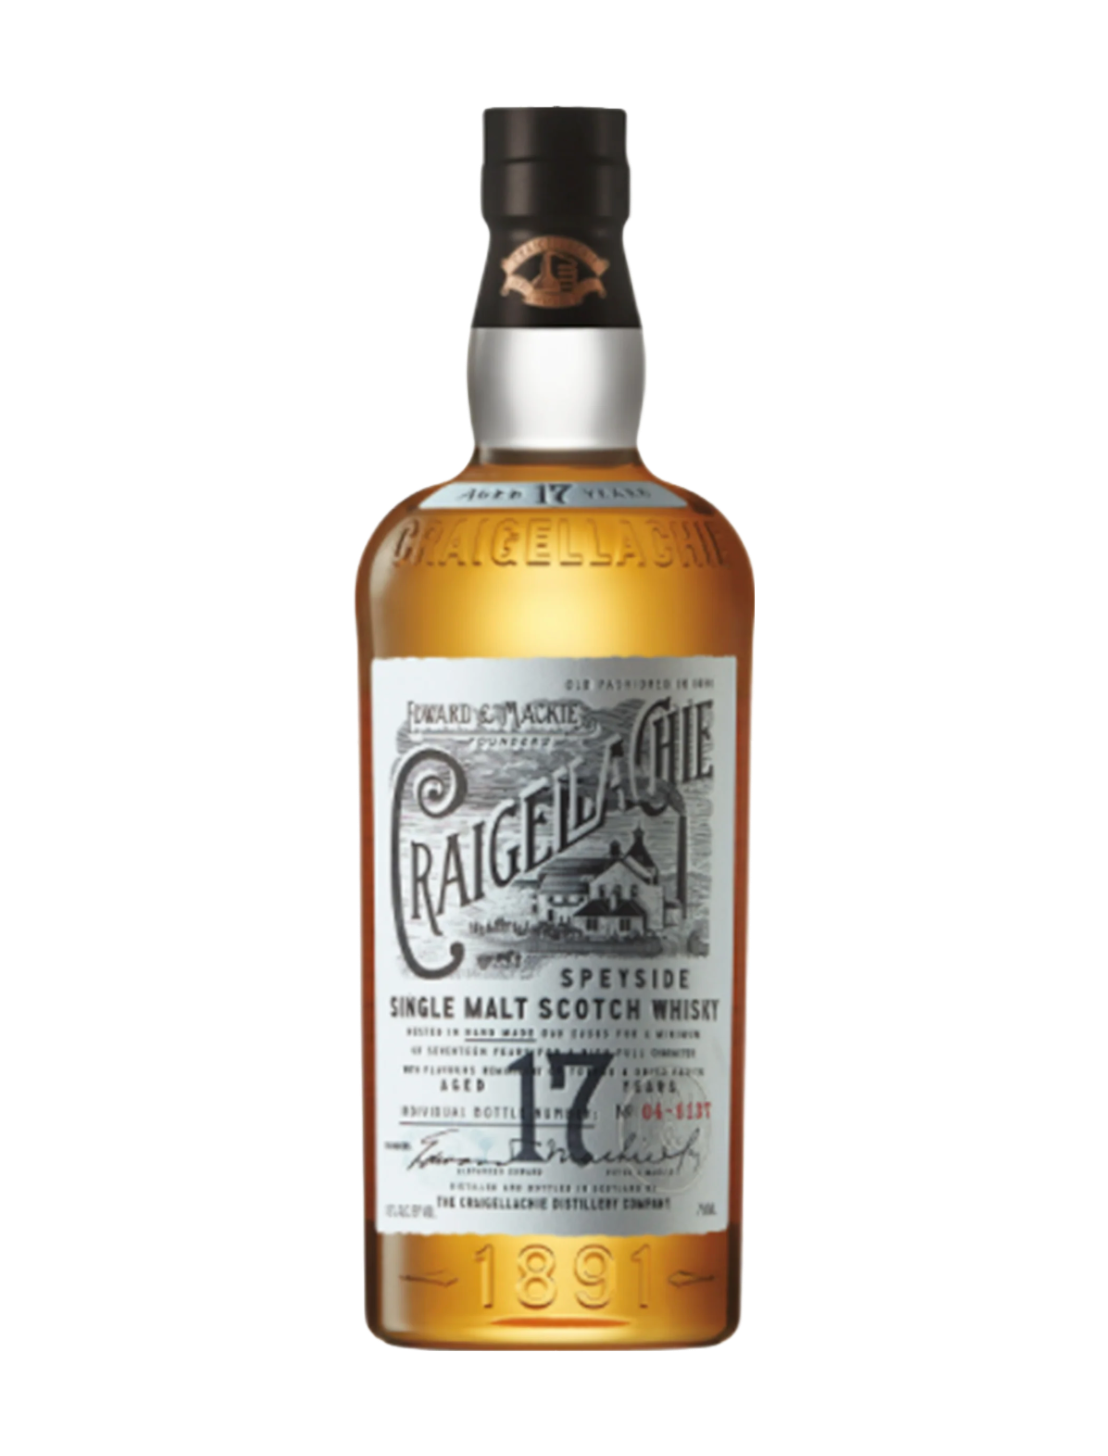 An elegant bottle of Craigellachie 17 Single Cask Single Malt Scotch in front of a plain white background